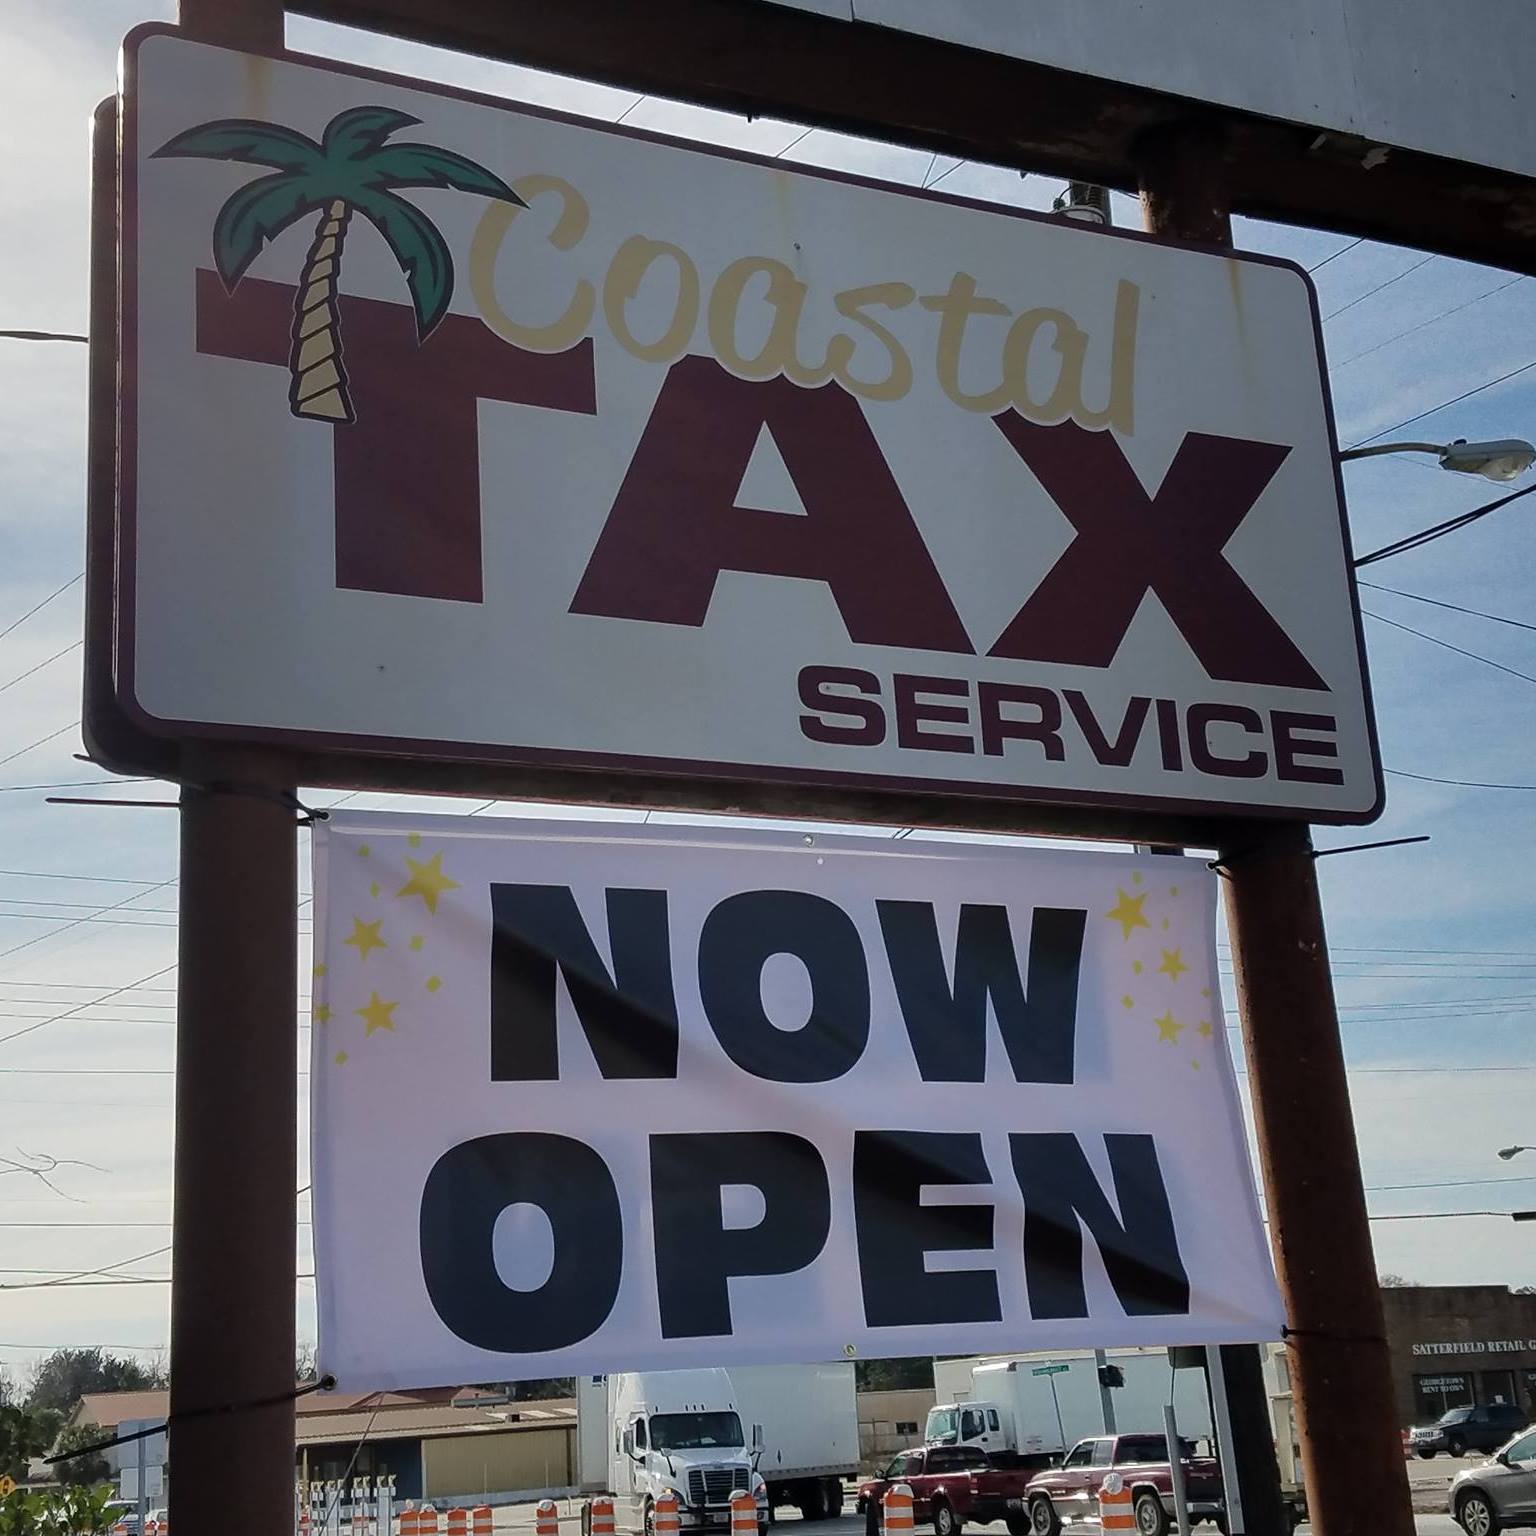 Coastal Tax Services